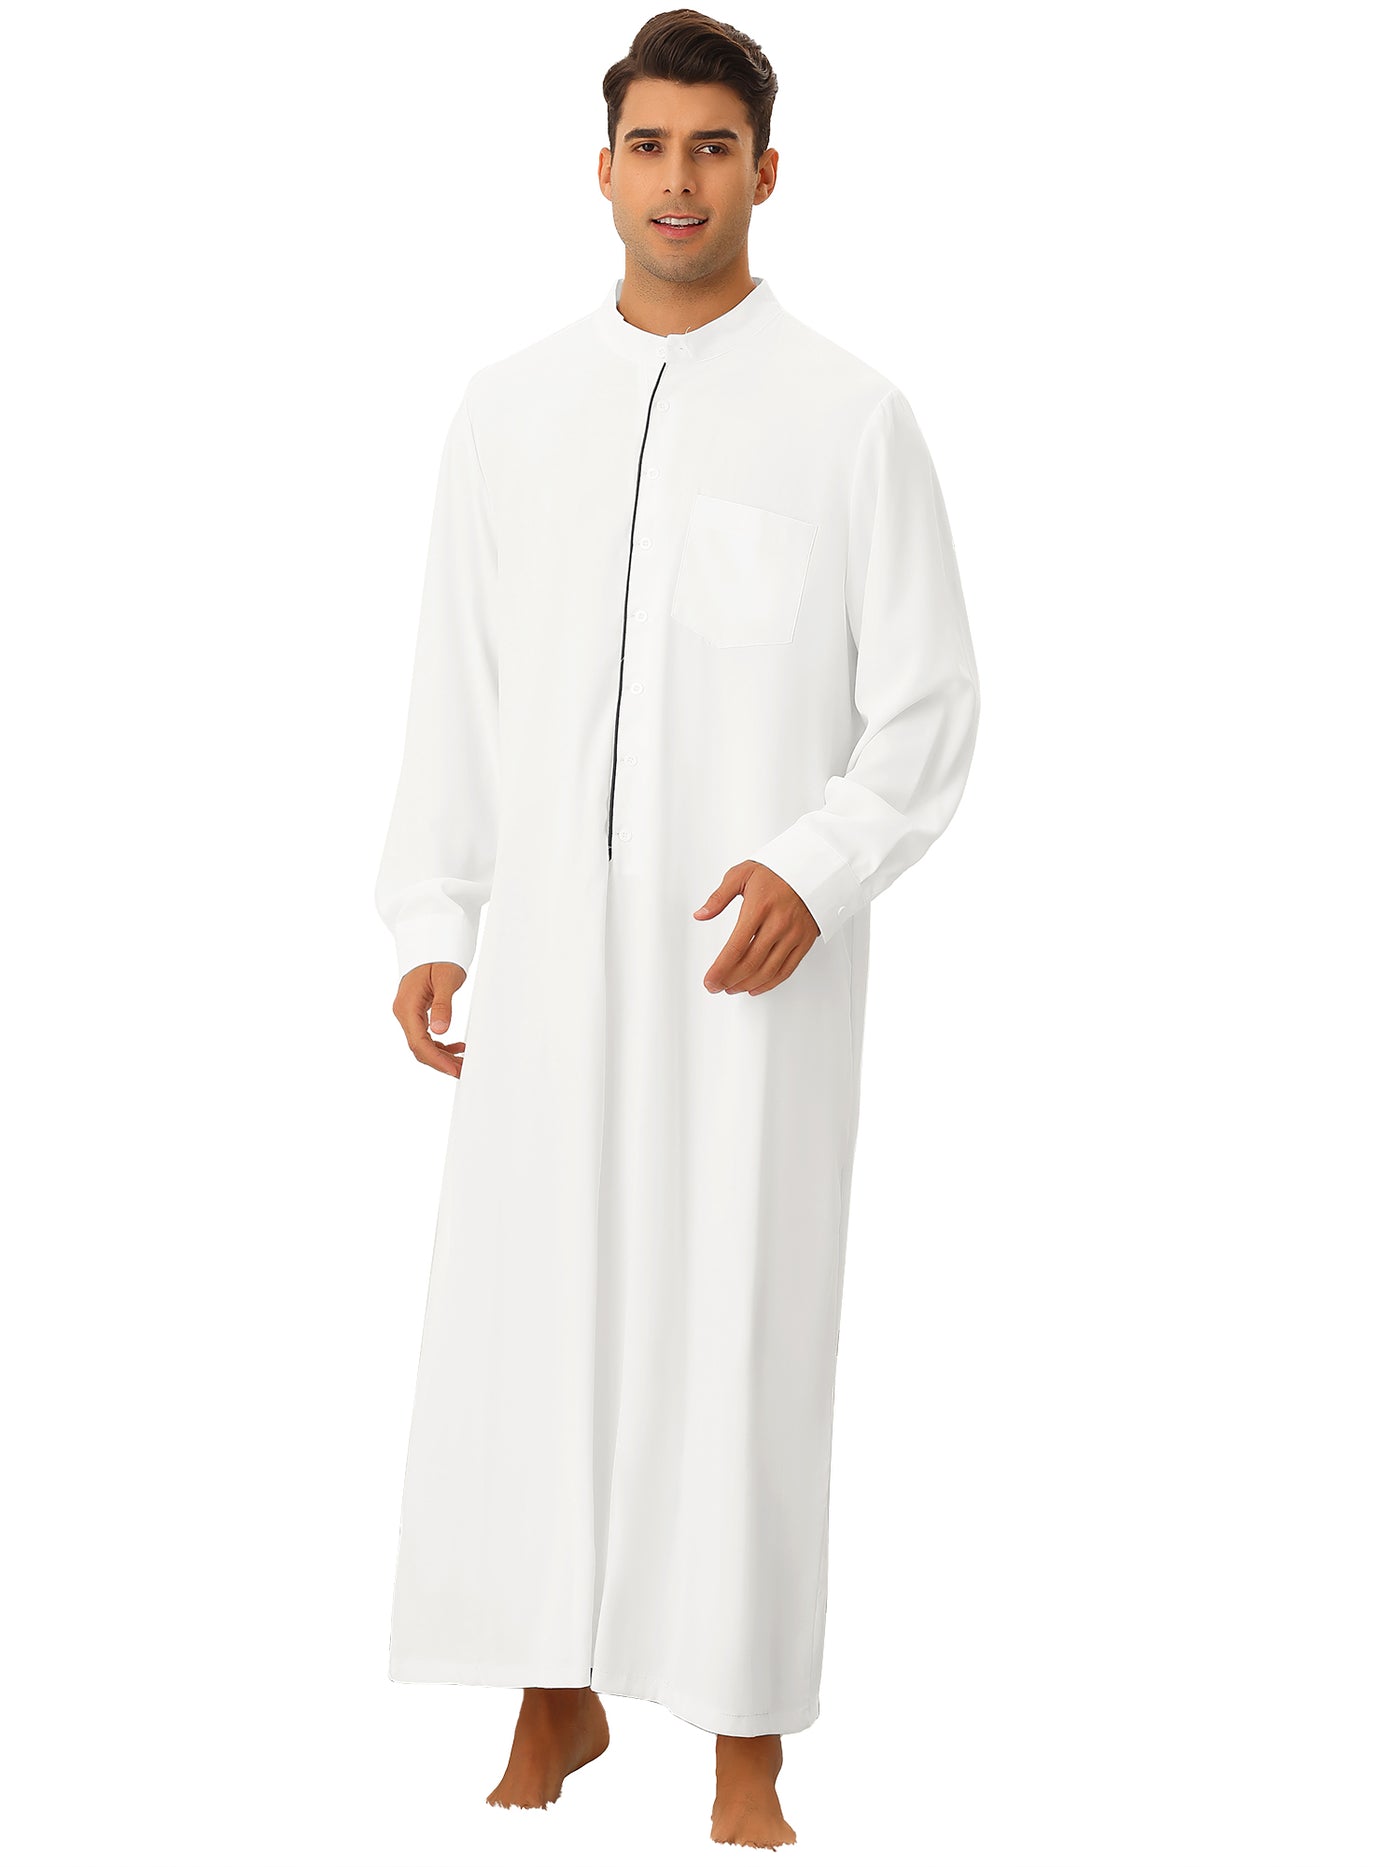 Bublédon Stand Collar Nightshirt for Men's Button Closure Long Sleeves Nightgown Sleep Shirt